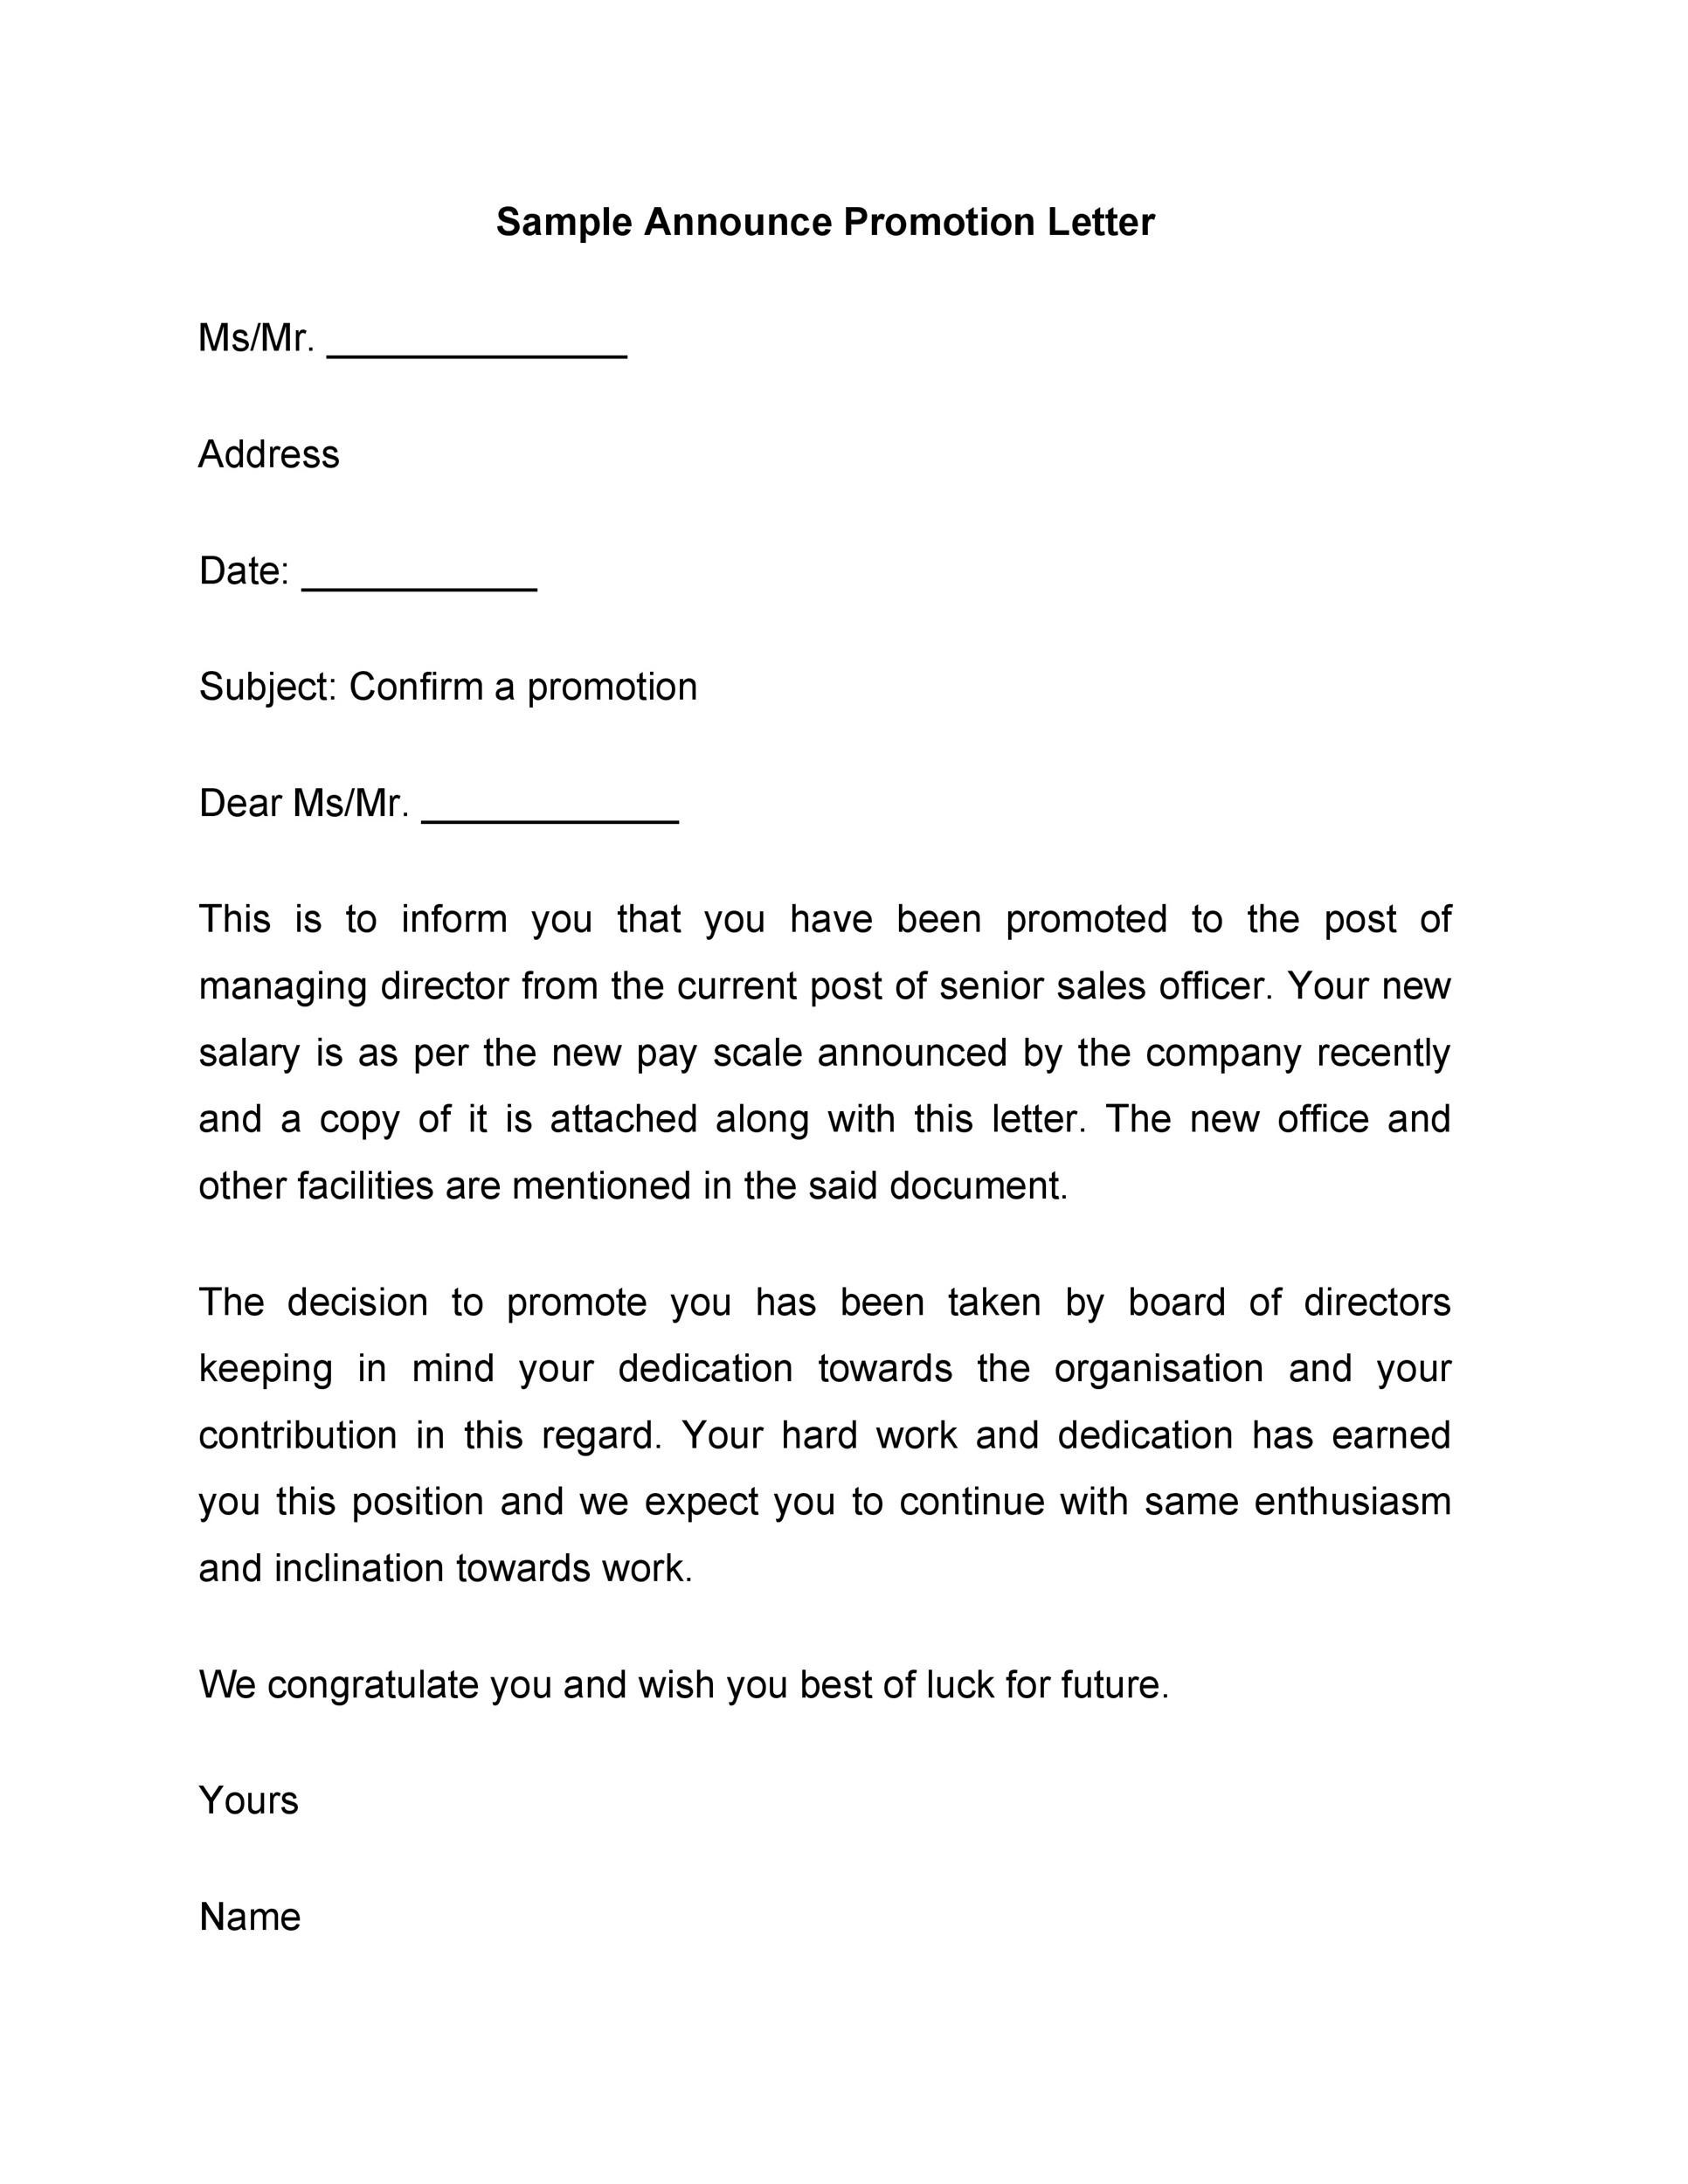 application letter sample for promotion